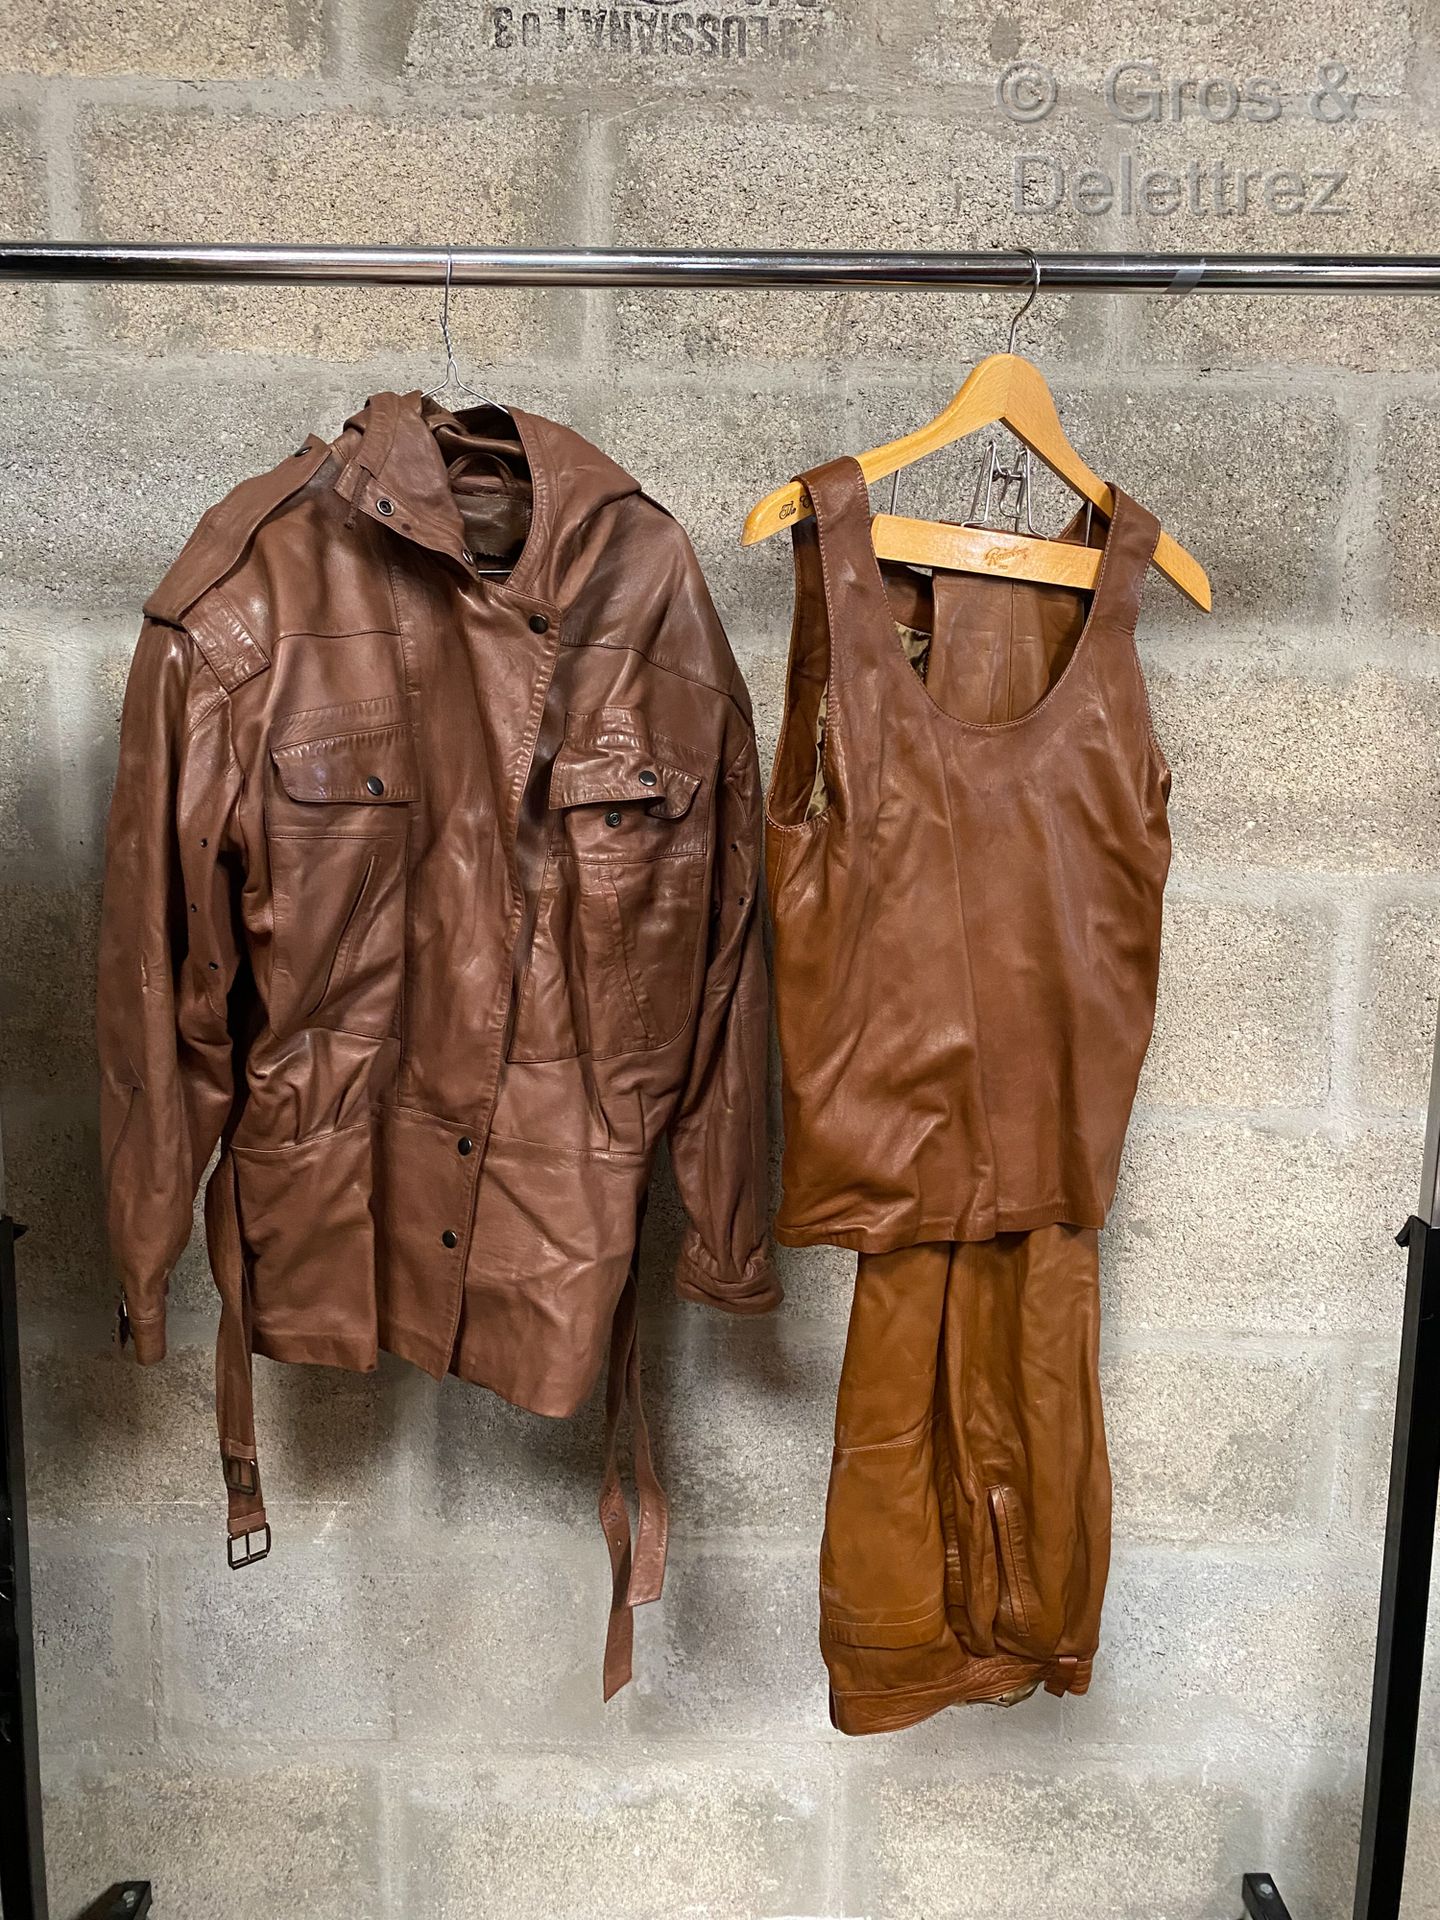 Null CLAUDE MONTANA FOR IDEAL CUIR，套装包括一件皮革连帽外套，一件背心和棕色皮裤